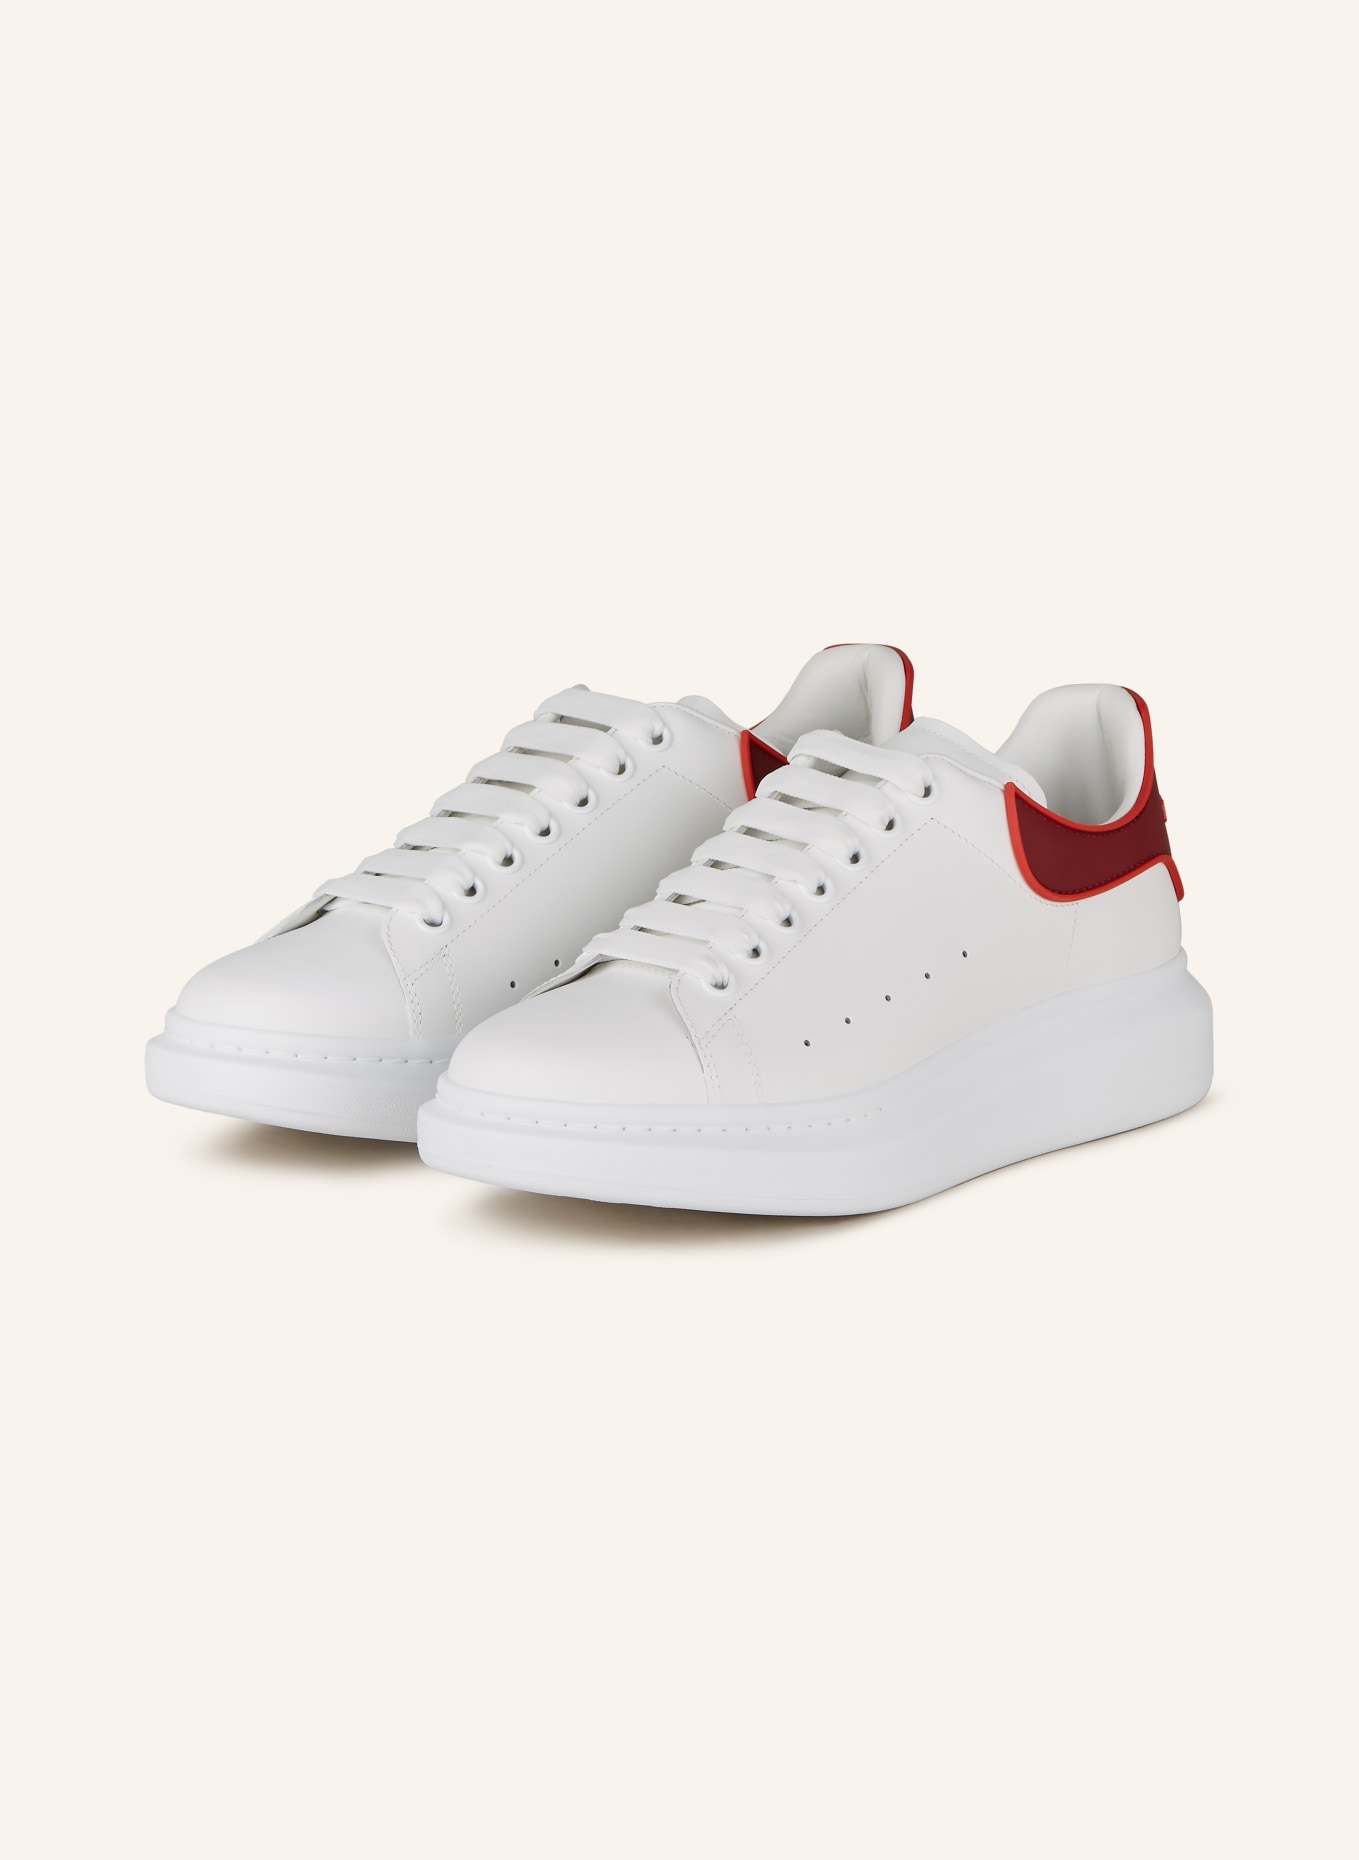 Alexander McQUEEN Sneakers in white/ dark red